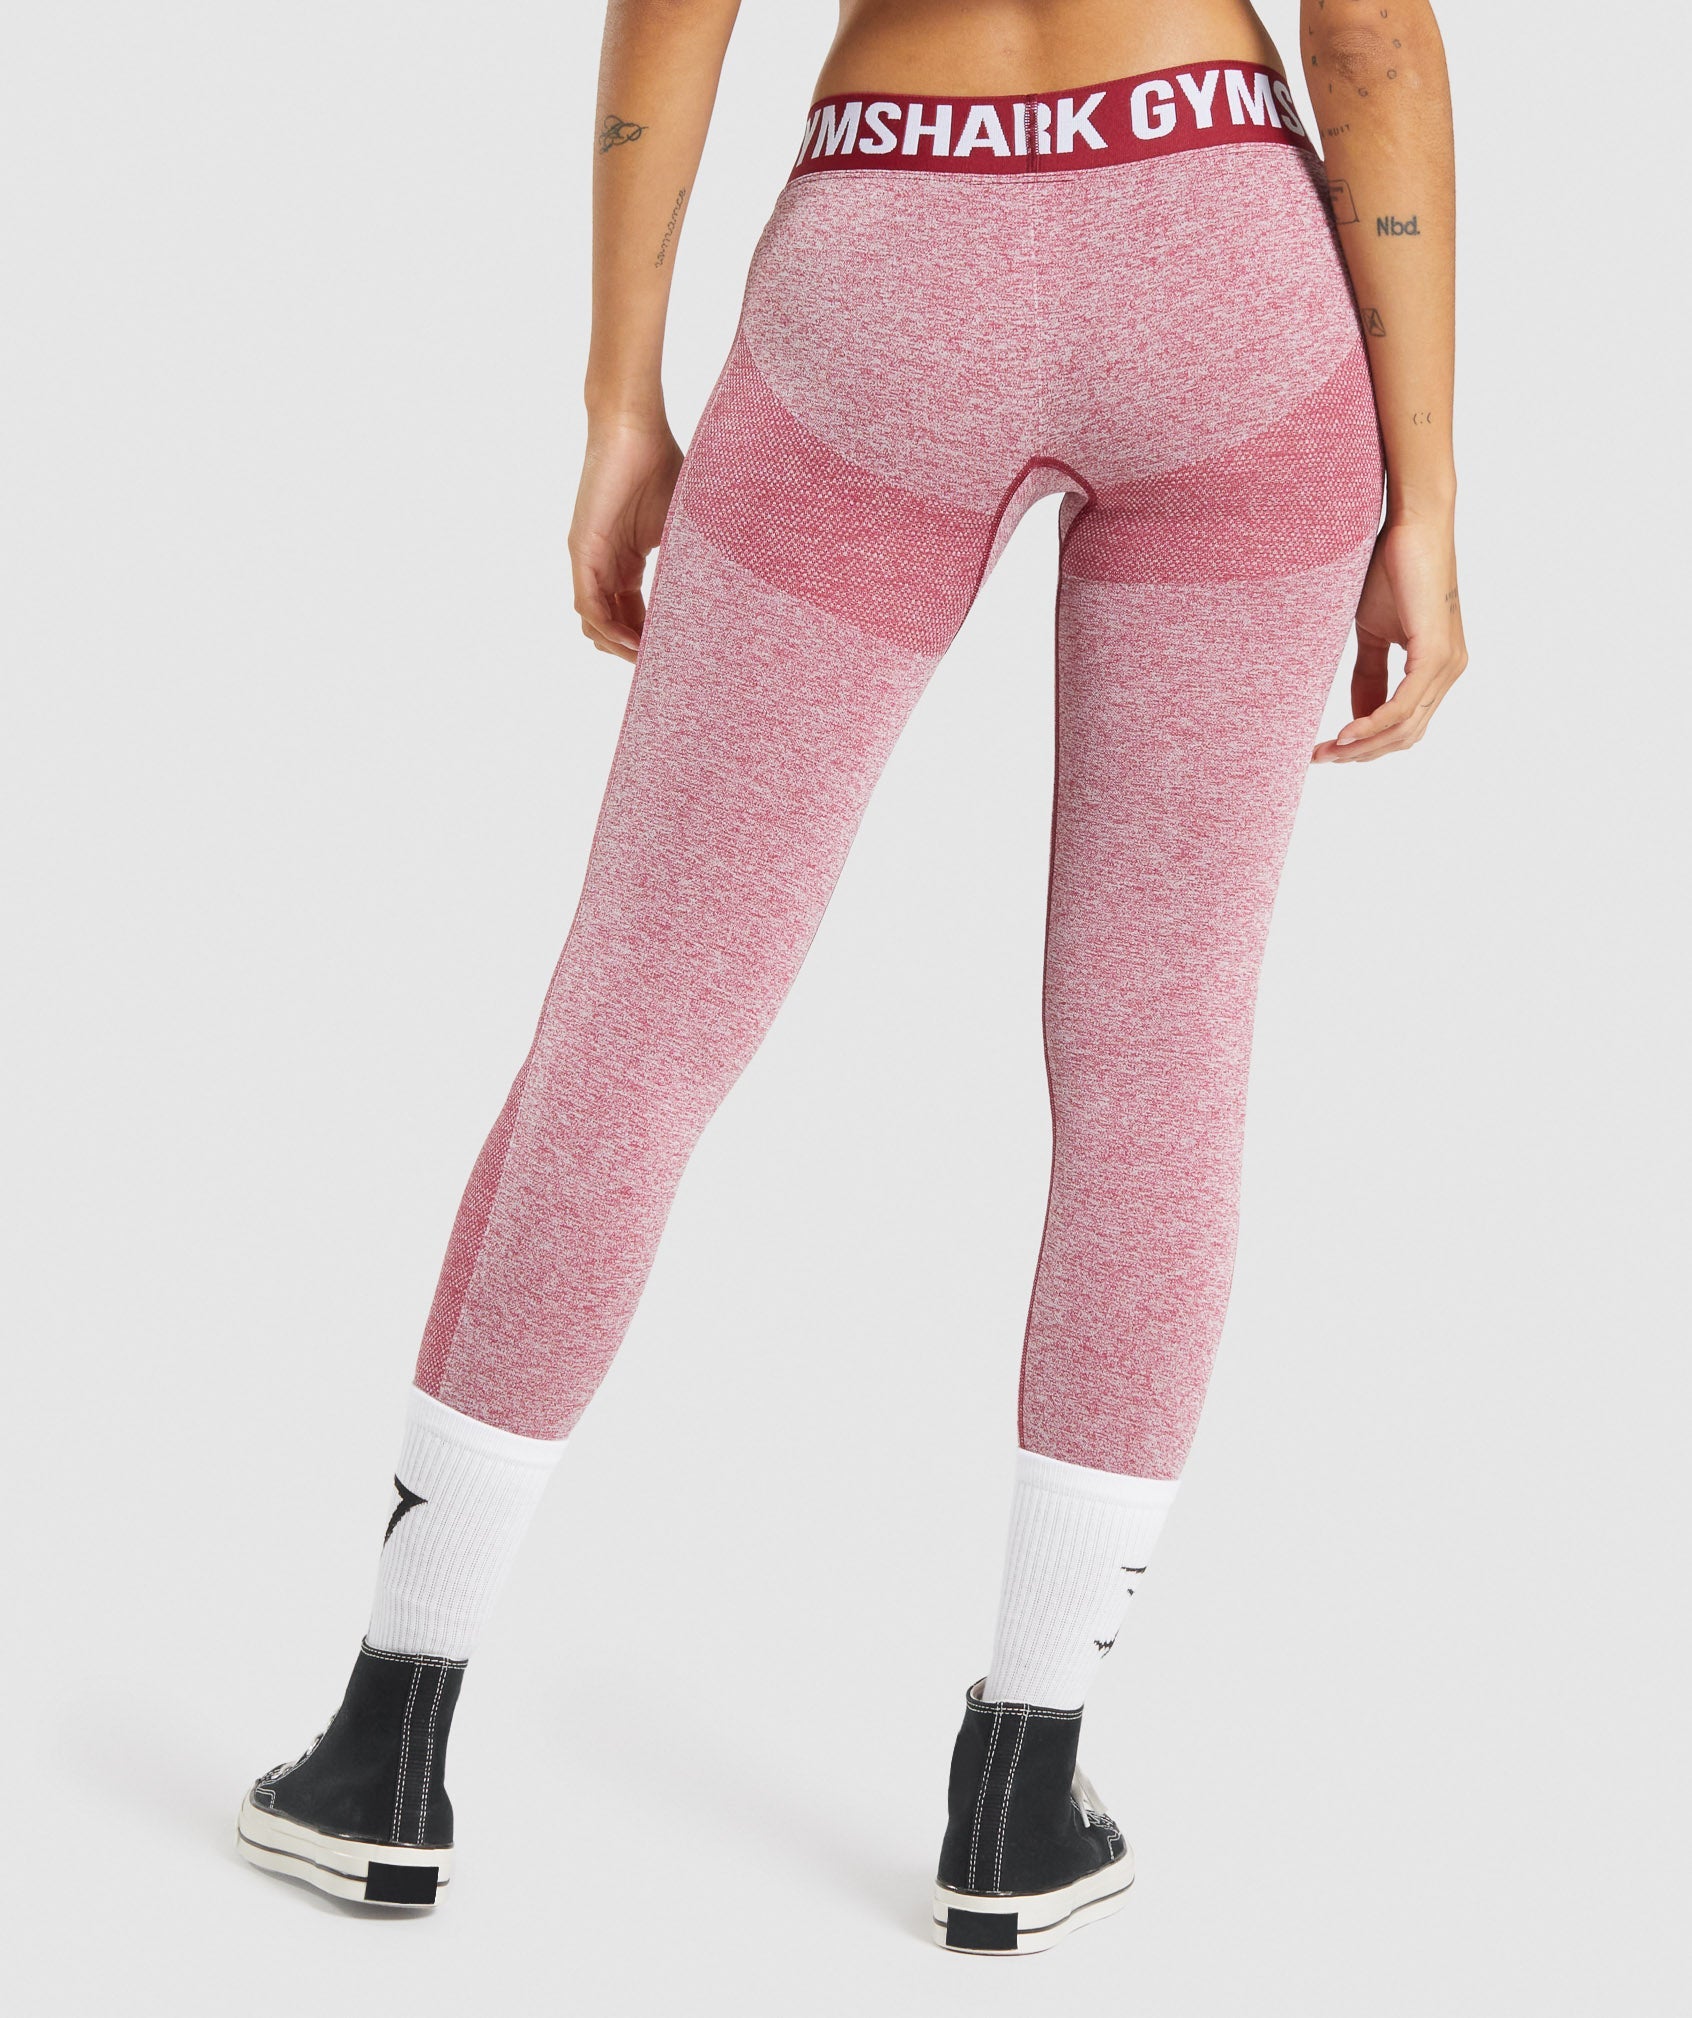 Stylish Gymshark Flex Shorts in Claret Marl/Pink